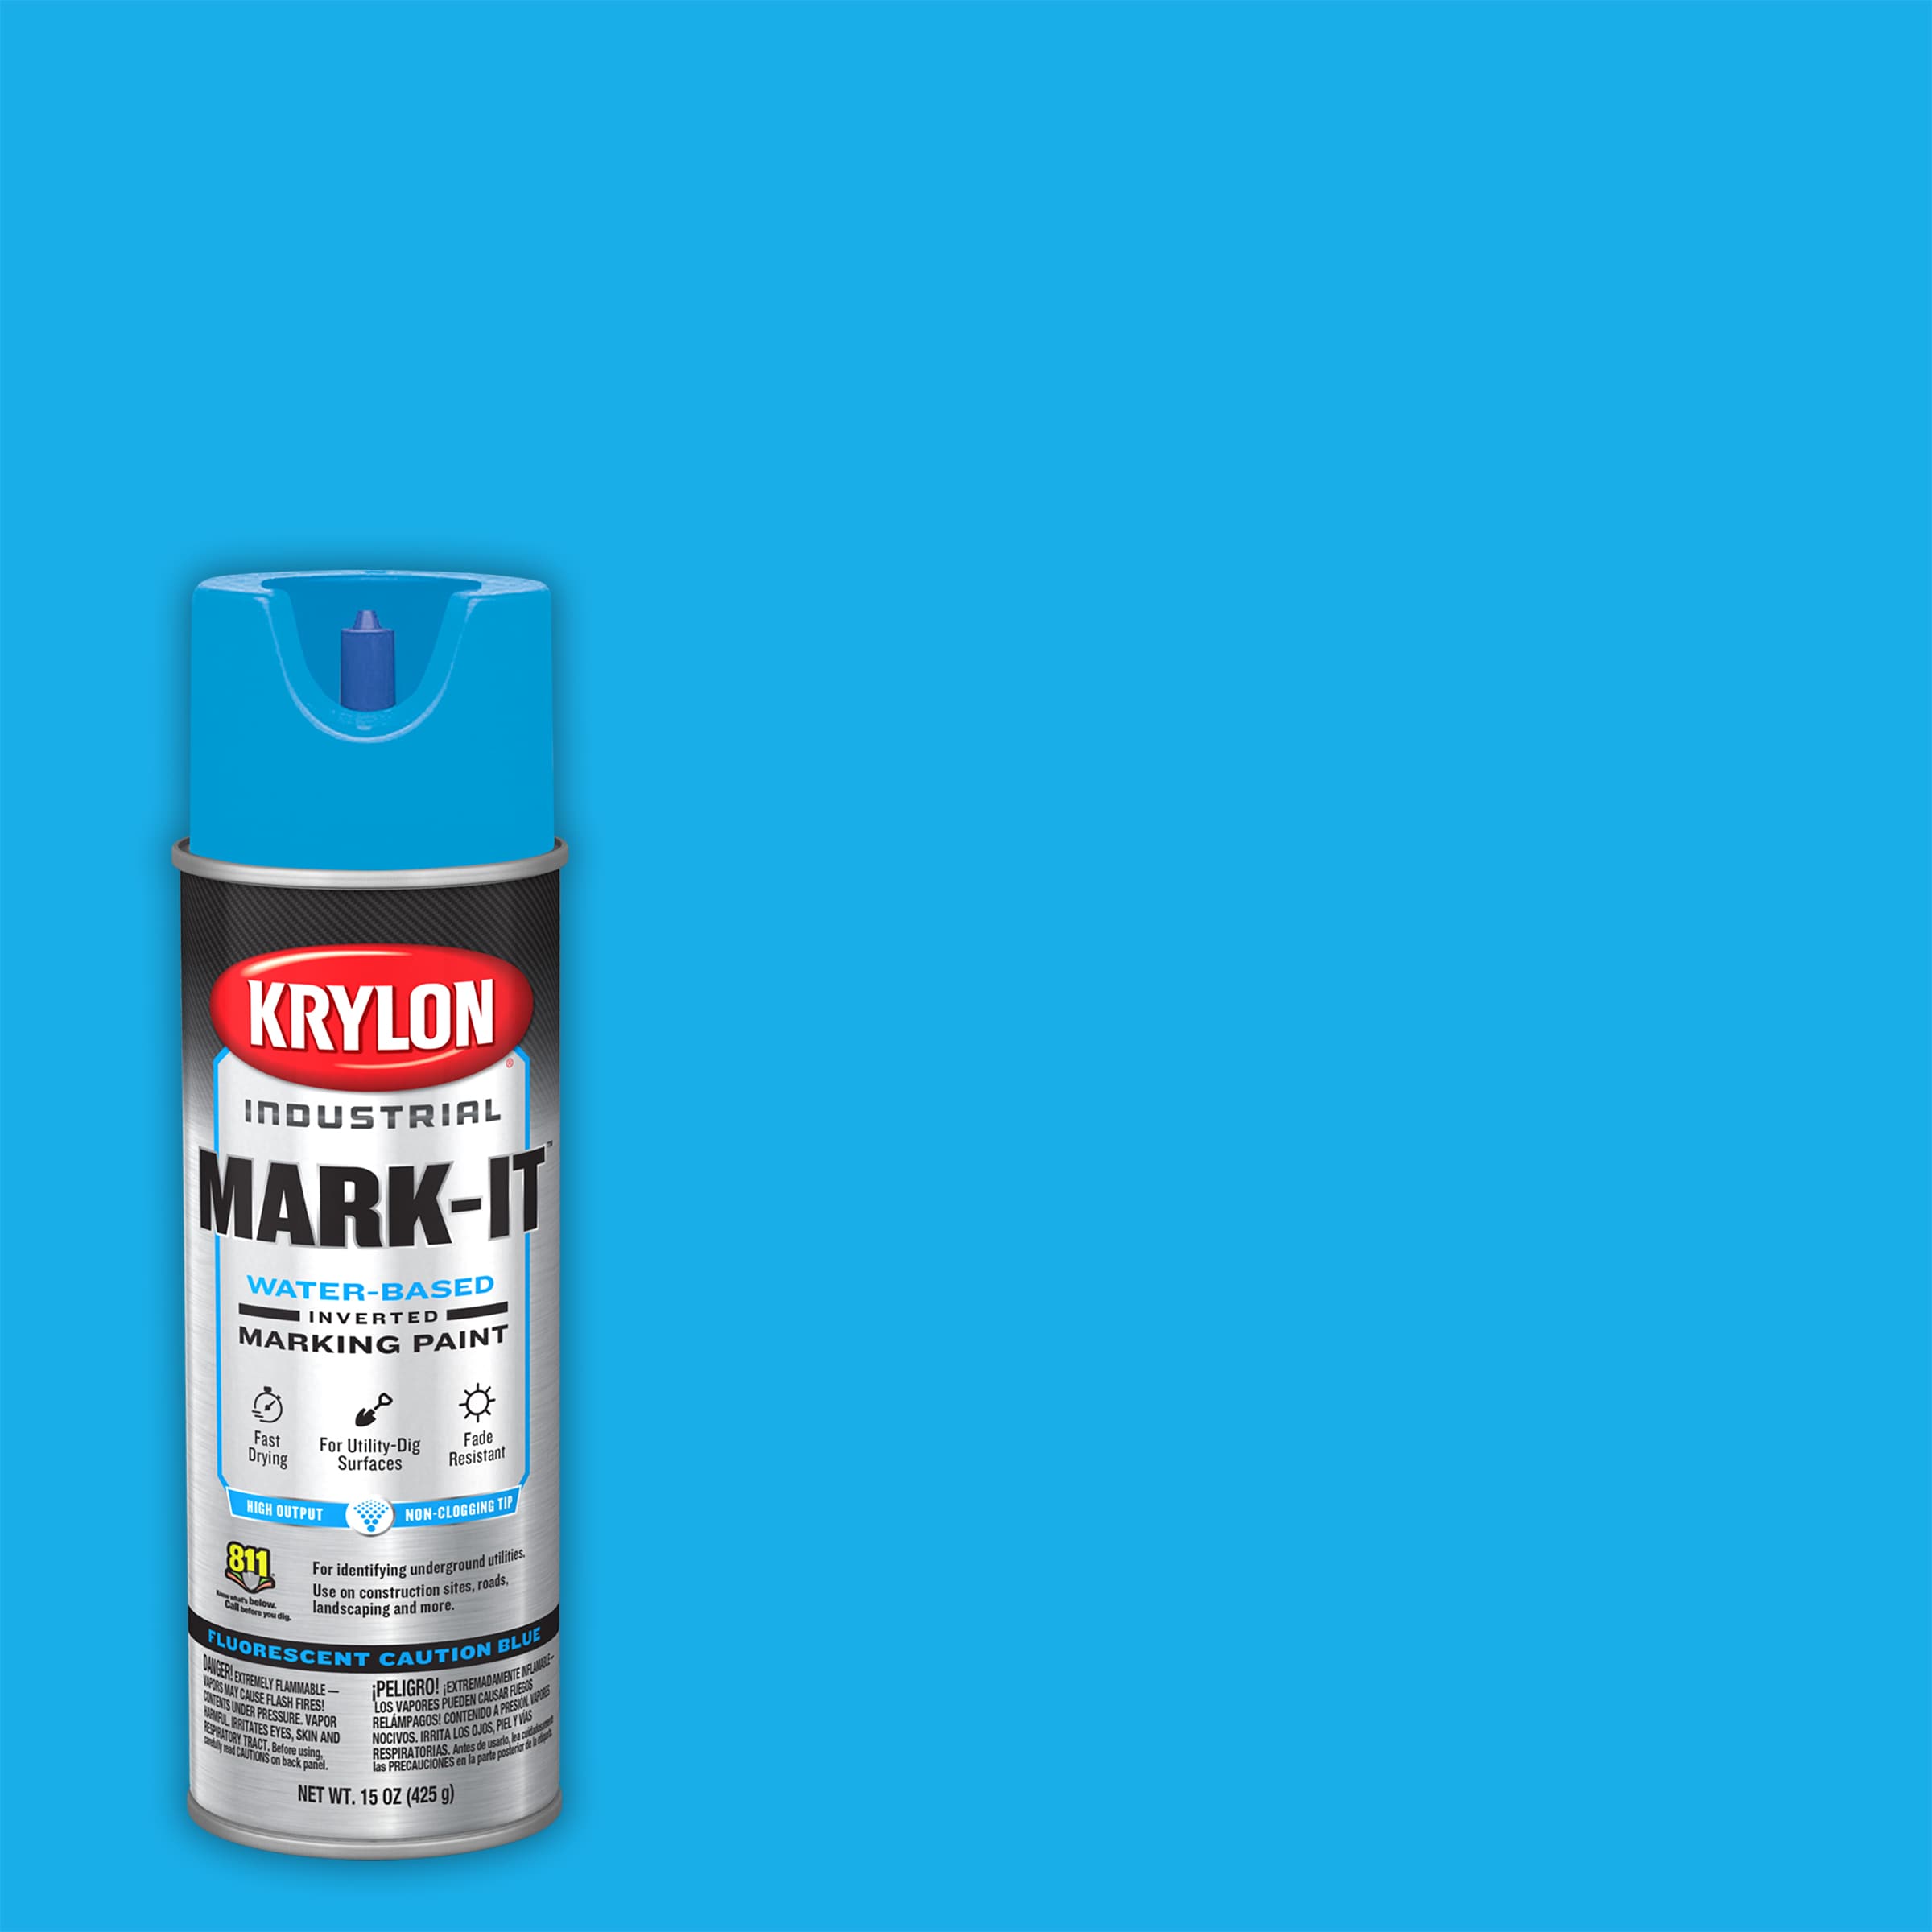 Neon Blue Spray Paint Fluorescent 200ml – Sprayster